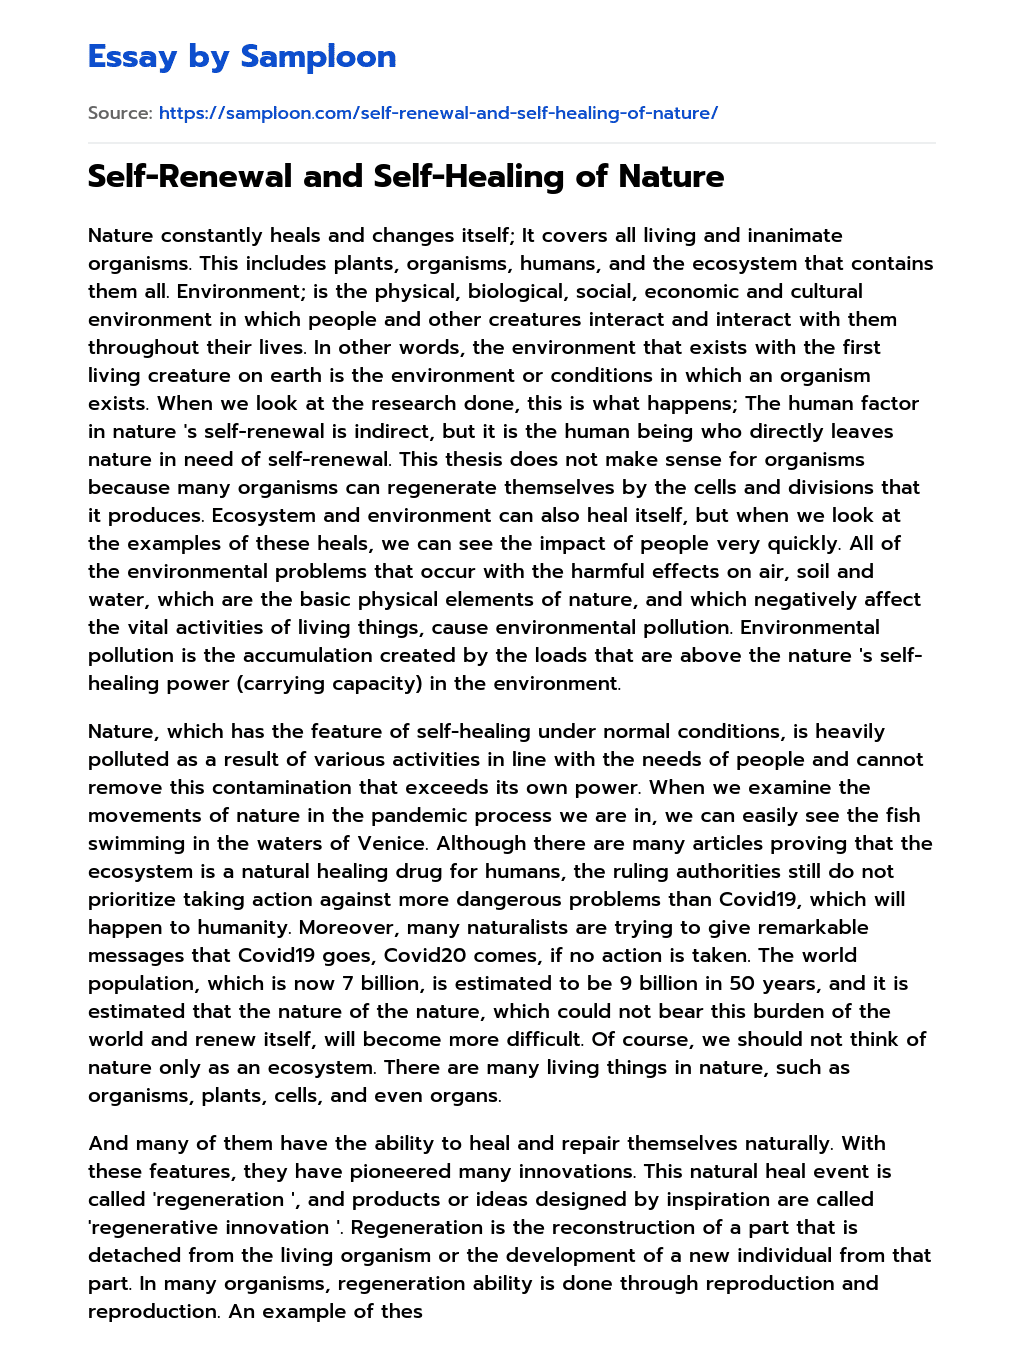 Self-Renewal and Self-Healing of Nature essay